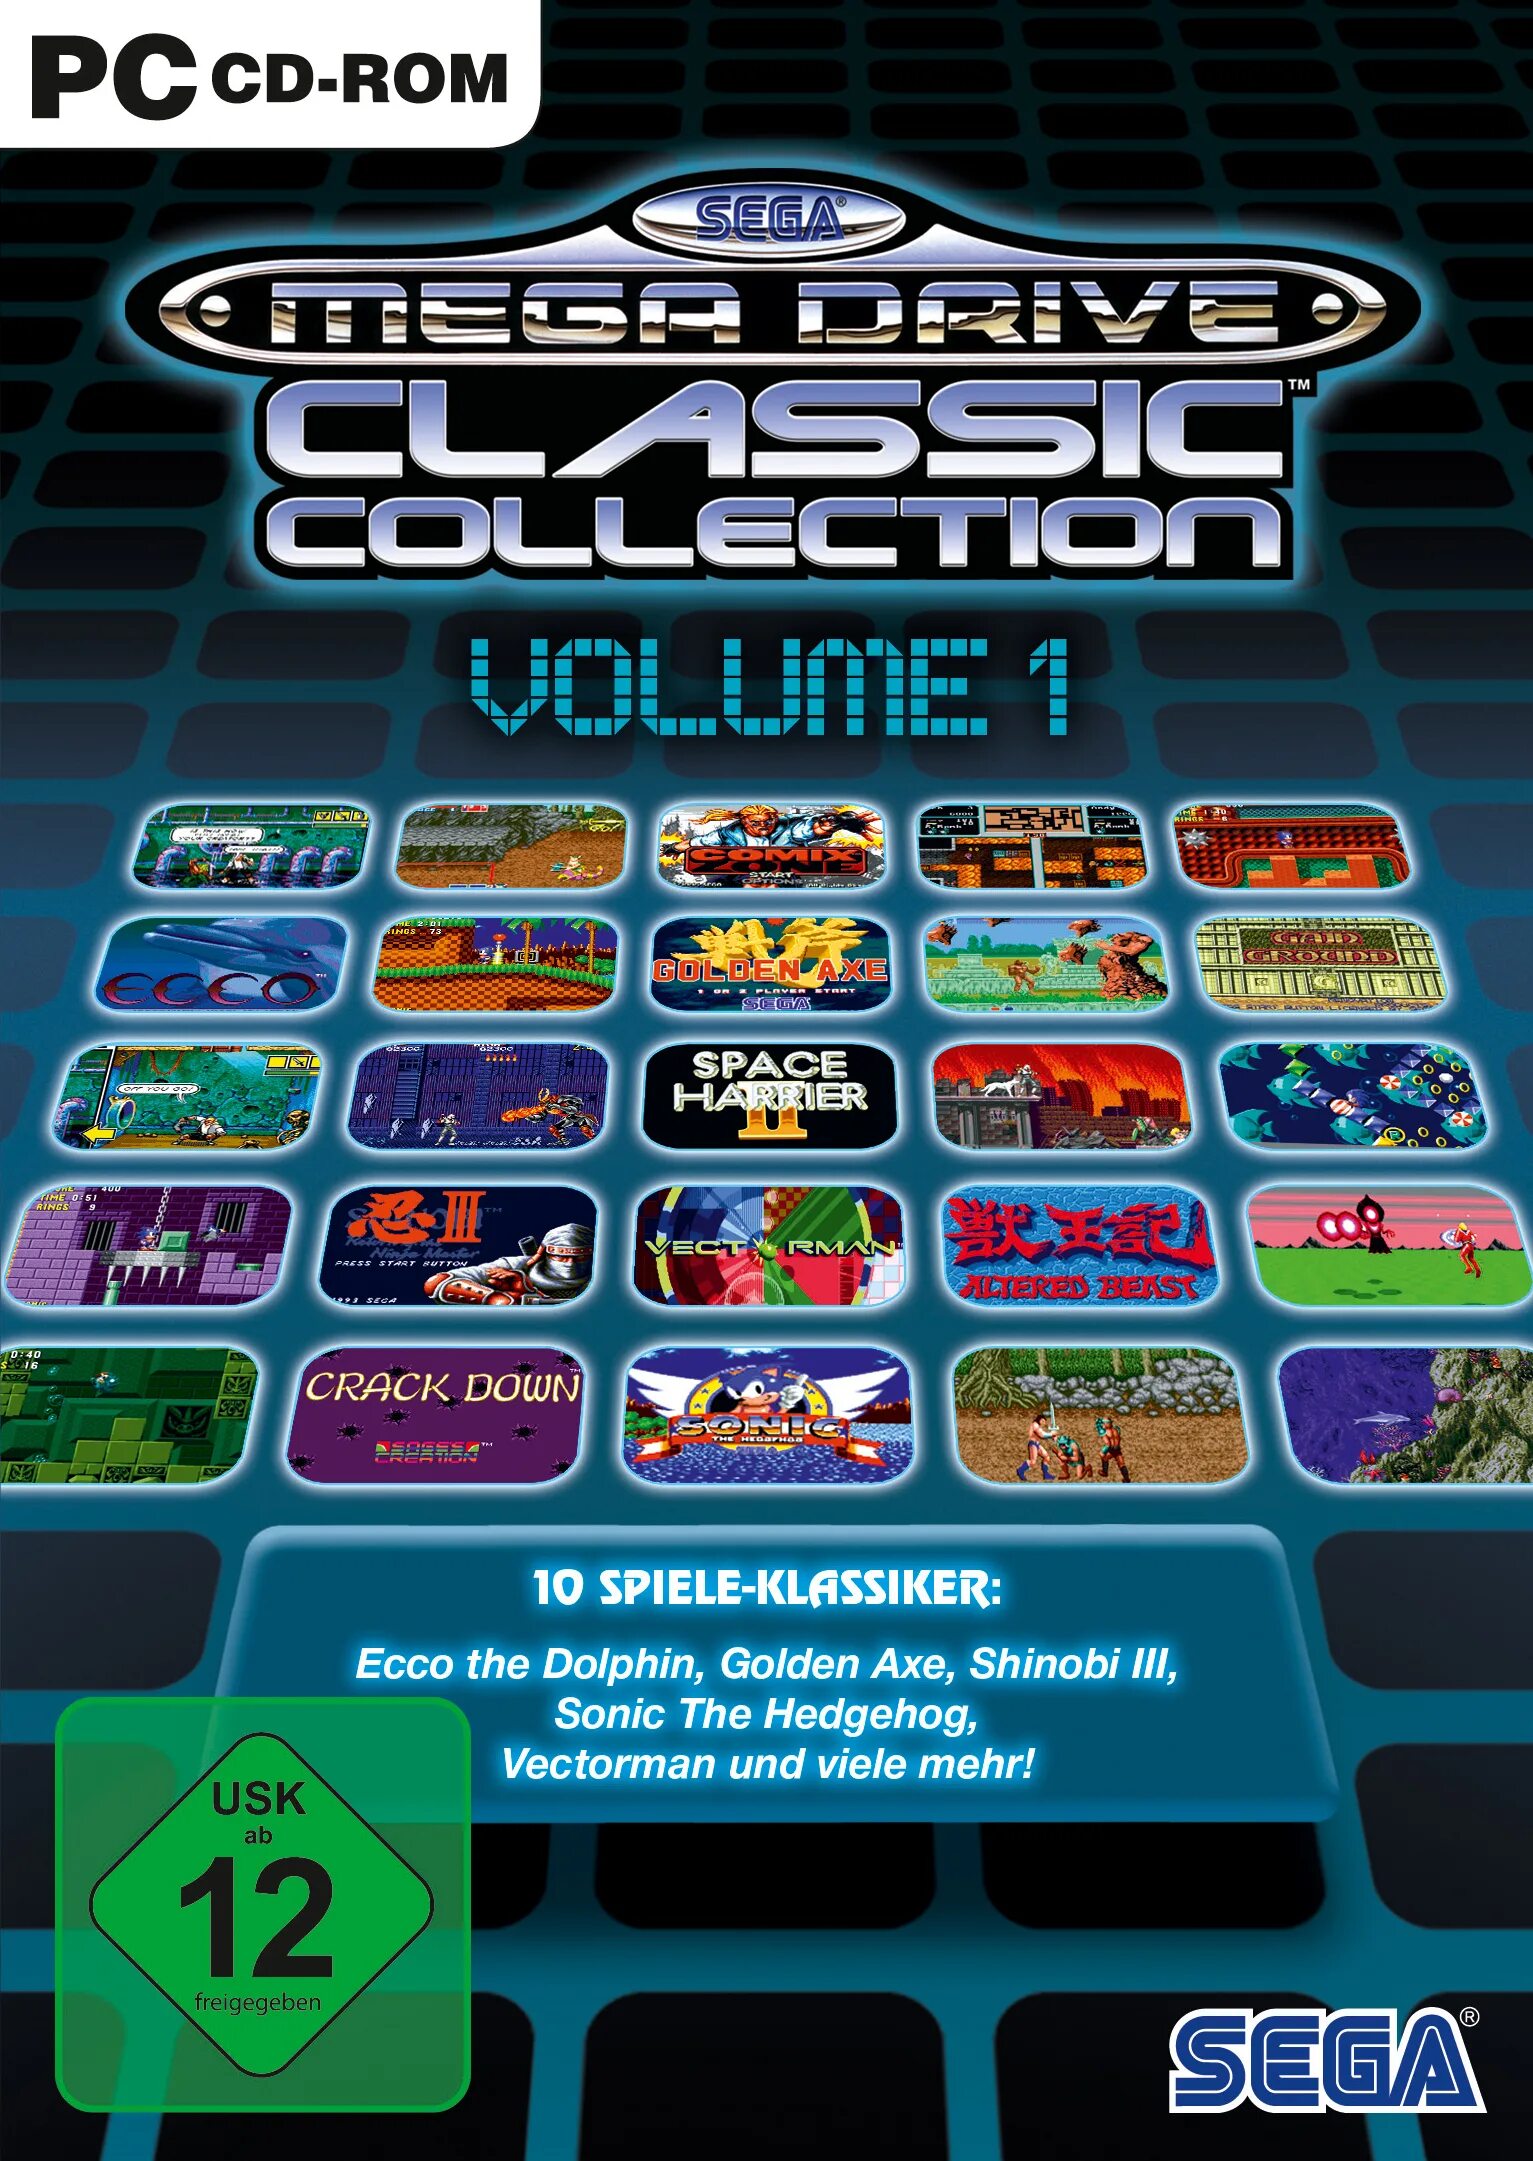 Sega Mega Drive Ultimate collection ps3. Sega Mega Drive Classics [ps4]. Sega Mega Drive and Genesis Classics. Sega Genesis Classics Xbox.